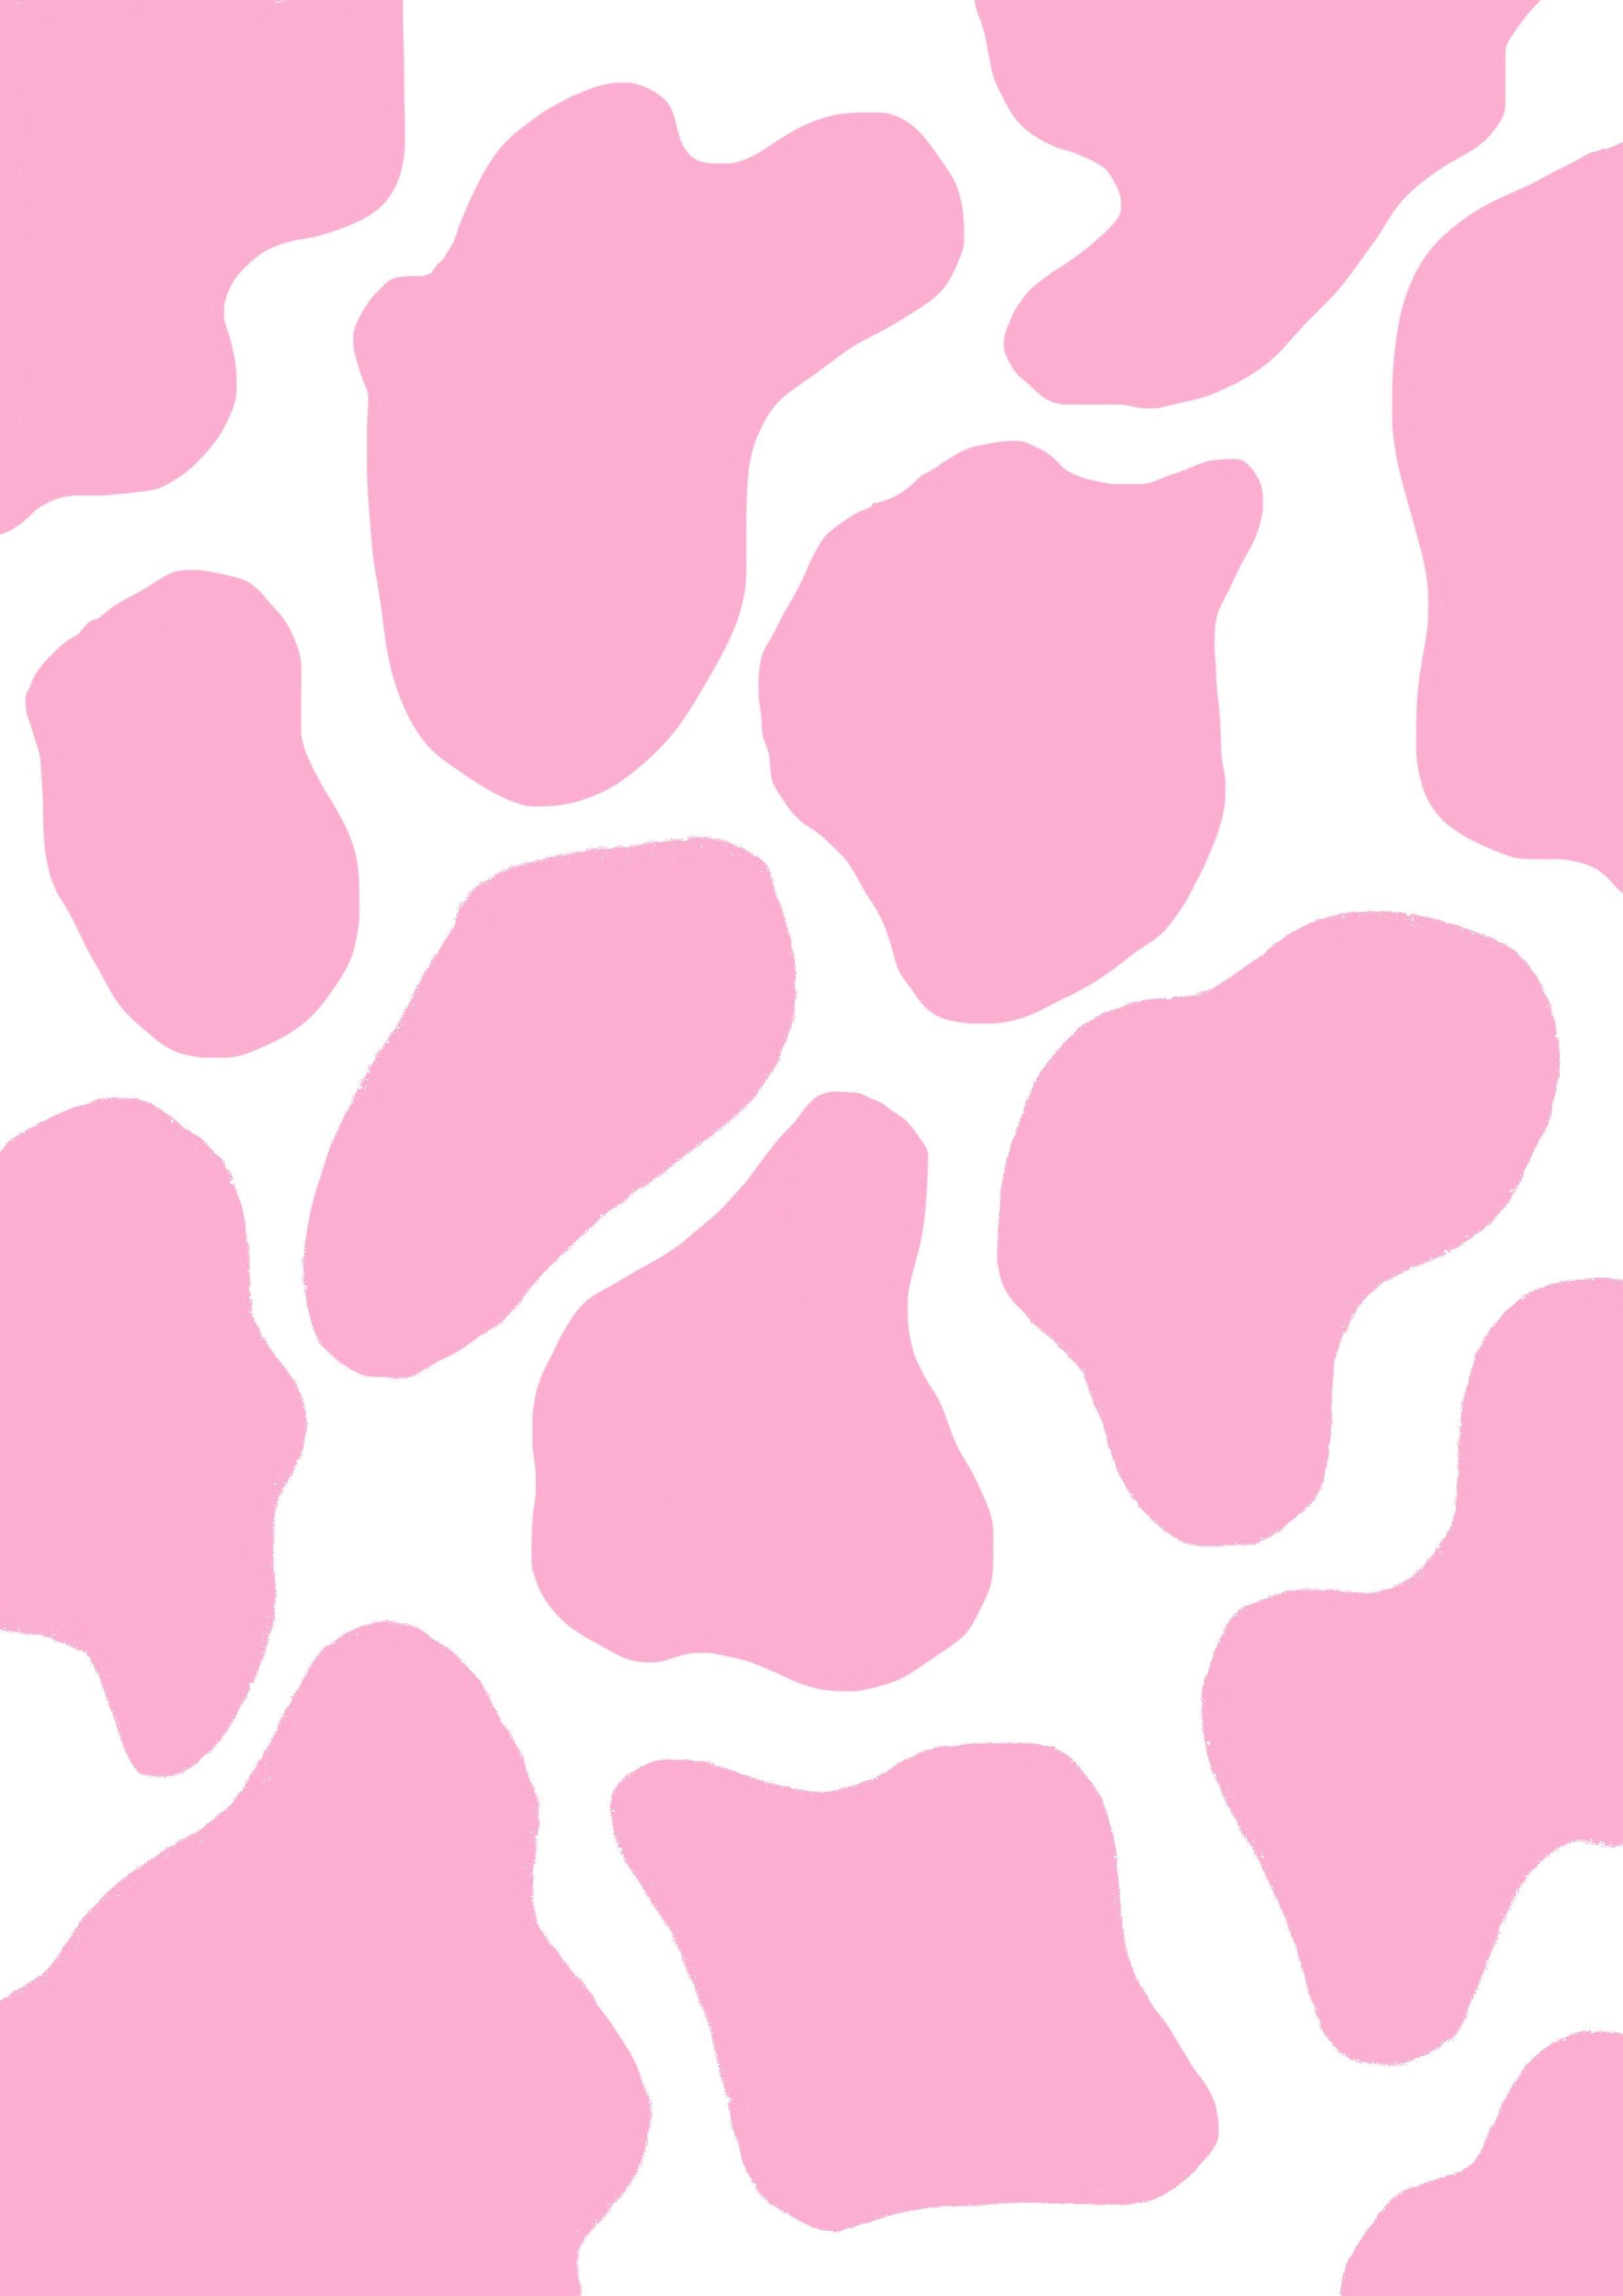 Cute Pink Cow Wallpaper Vector Stock Illustration  Download Image Now   Anniversary Art Cartoon  iStock